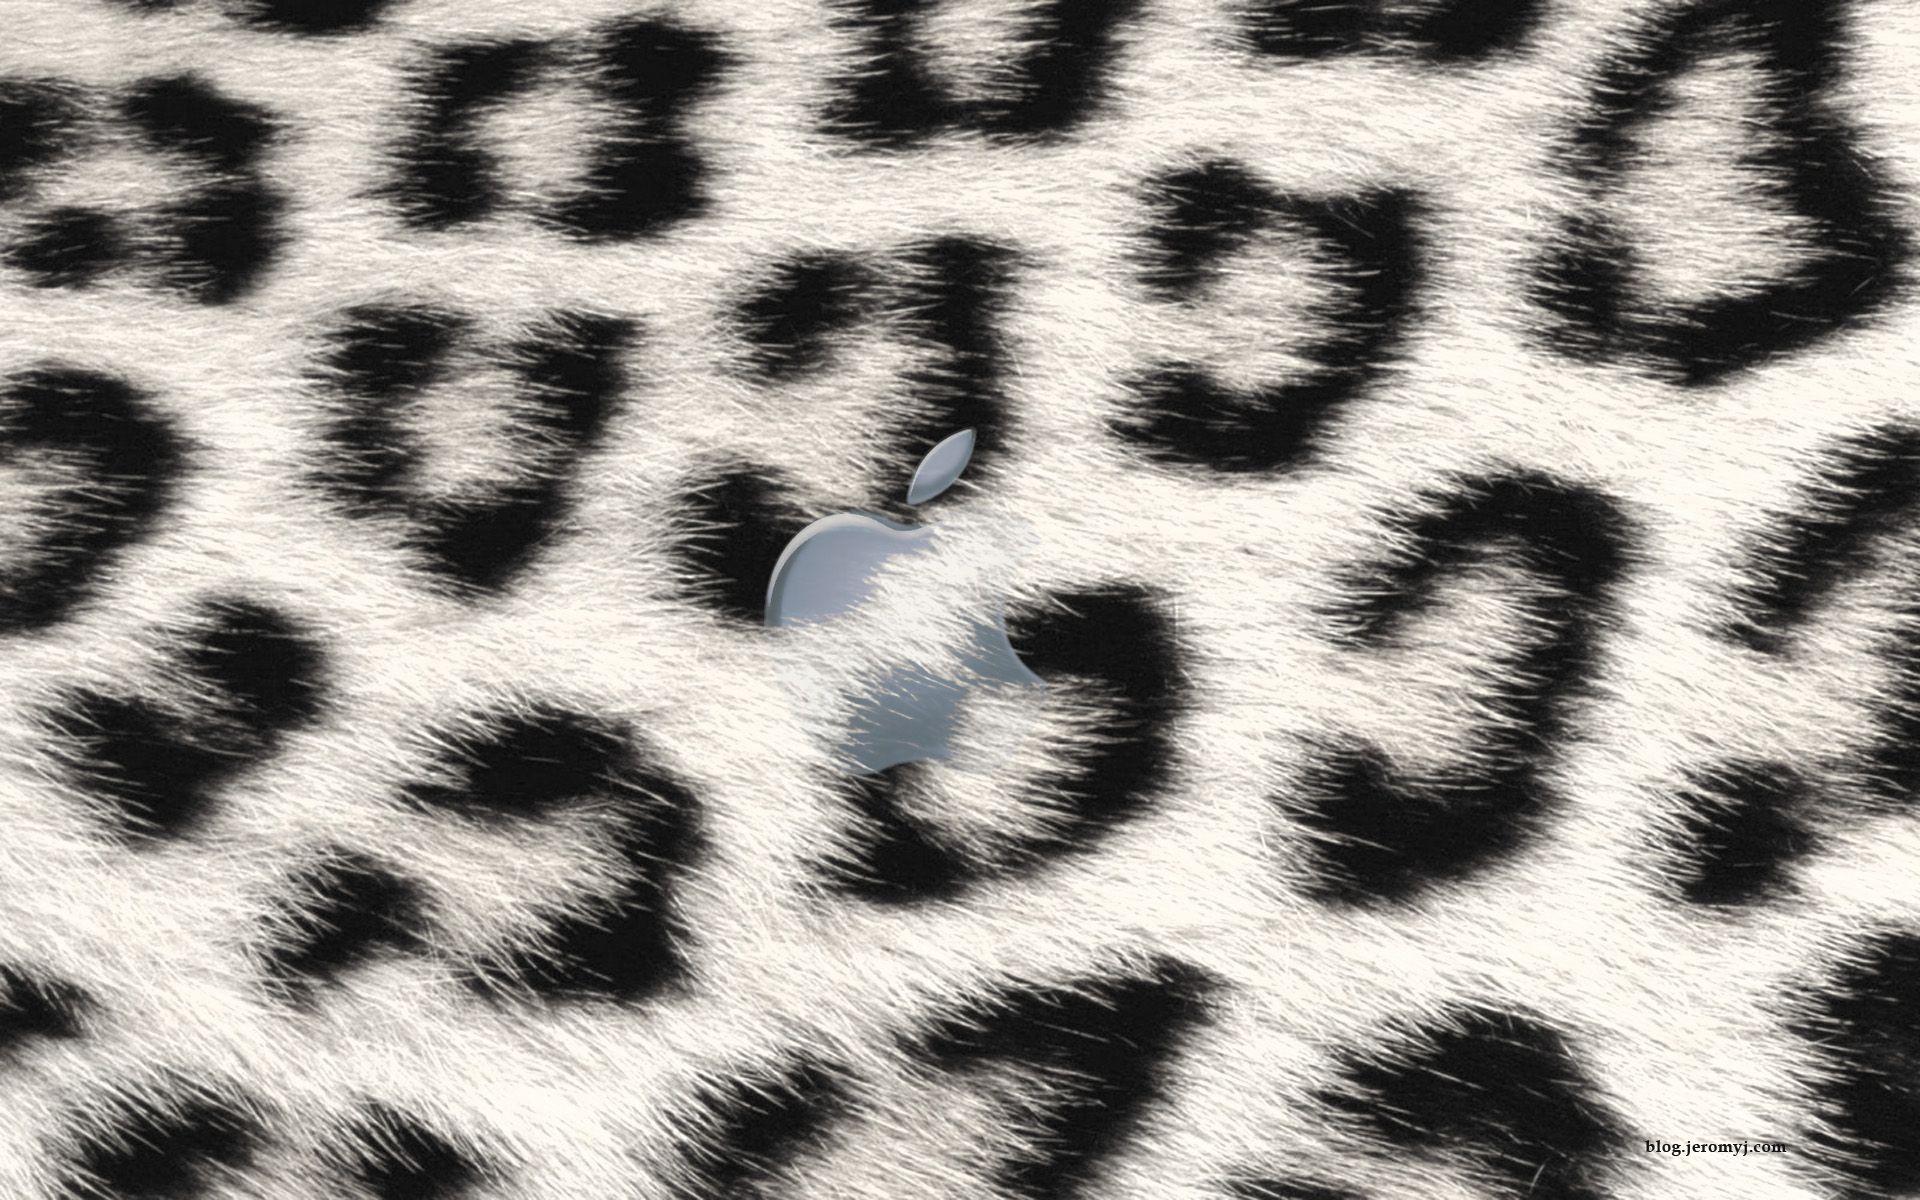 Snow Leopard Wallpaper. HD Wallpaper Image